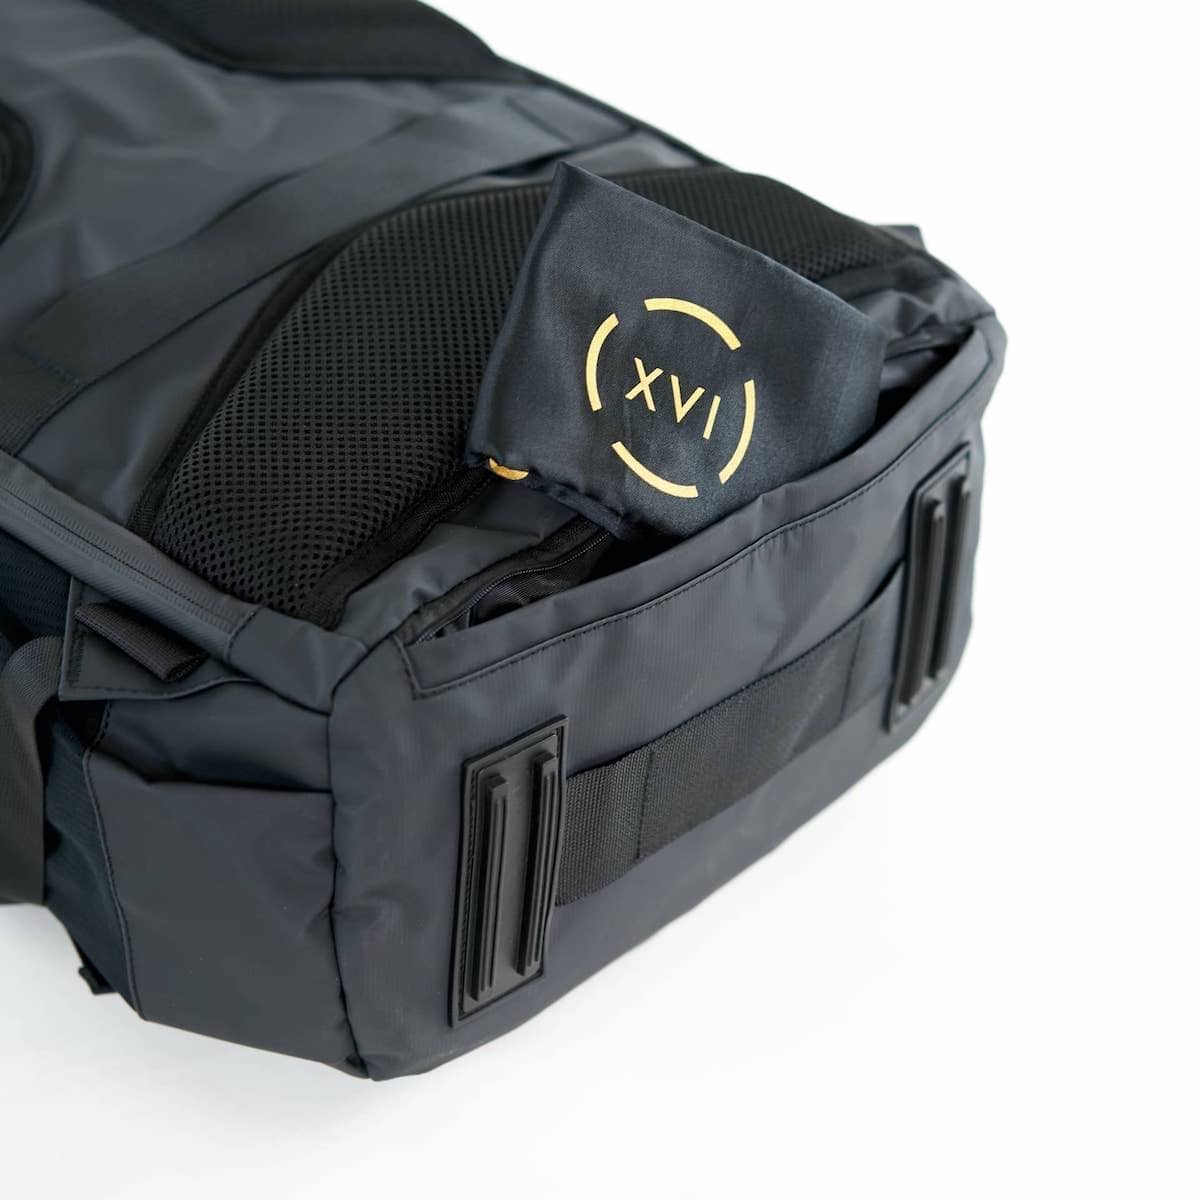 Best Carry On Backpack - Best Travel Backpack for Women - Sunny 16 Camera Bag